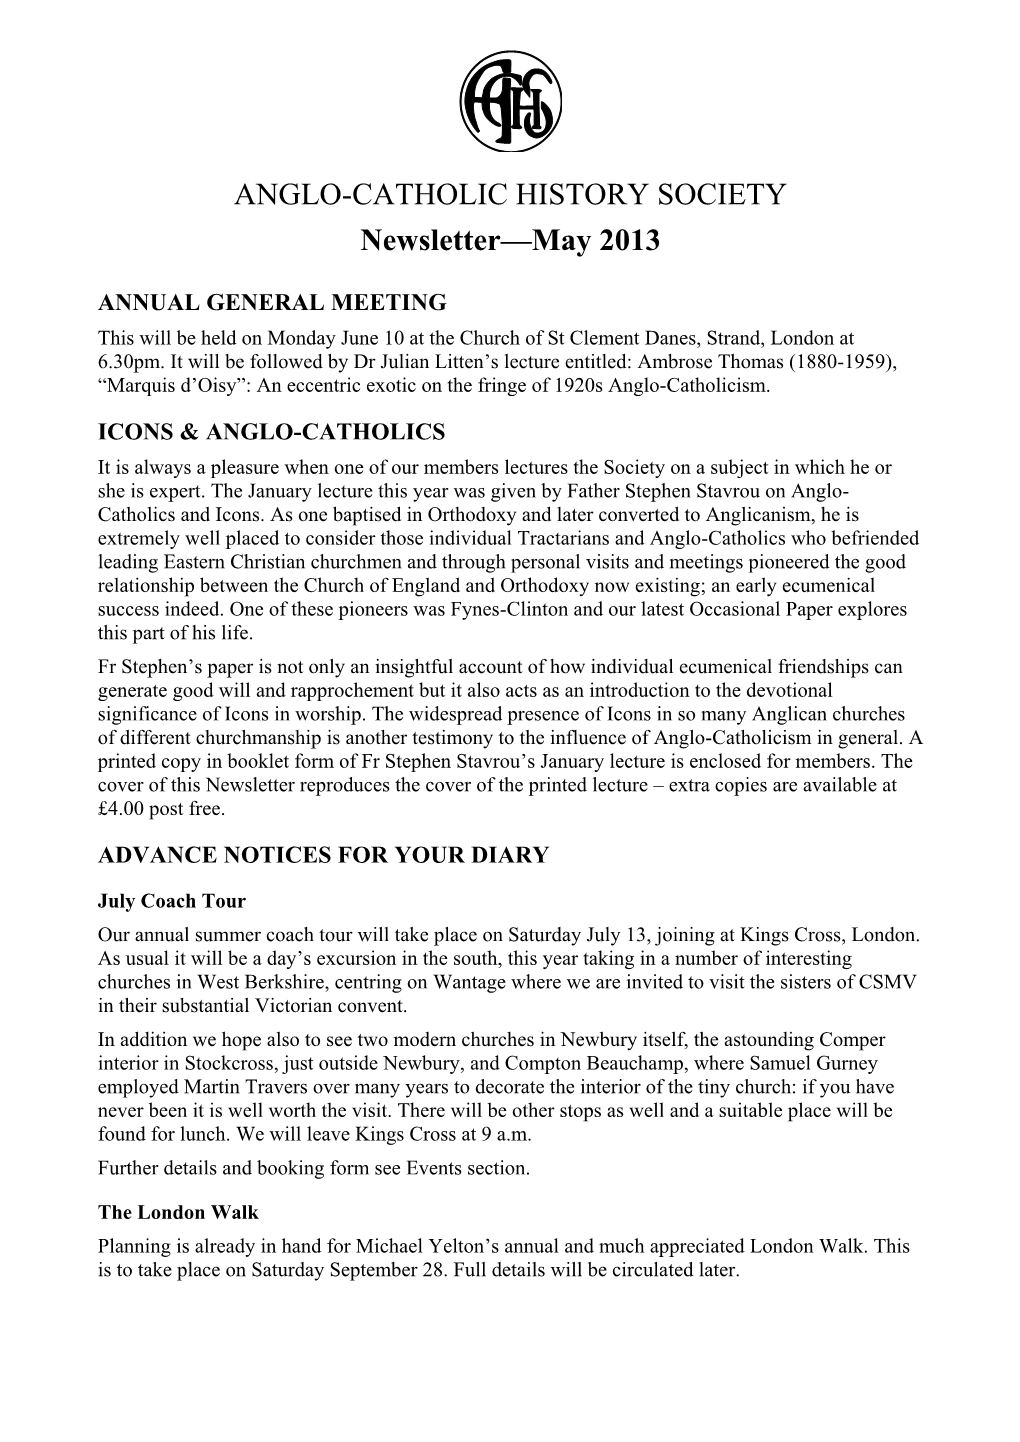 ANGLO-CATHOLIC HISTORY SOCIETY Newsletter—May 2013